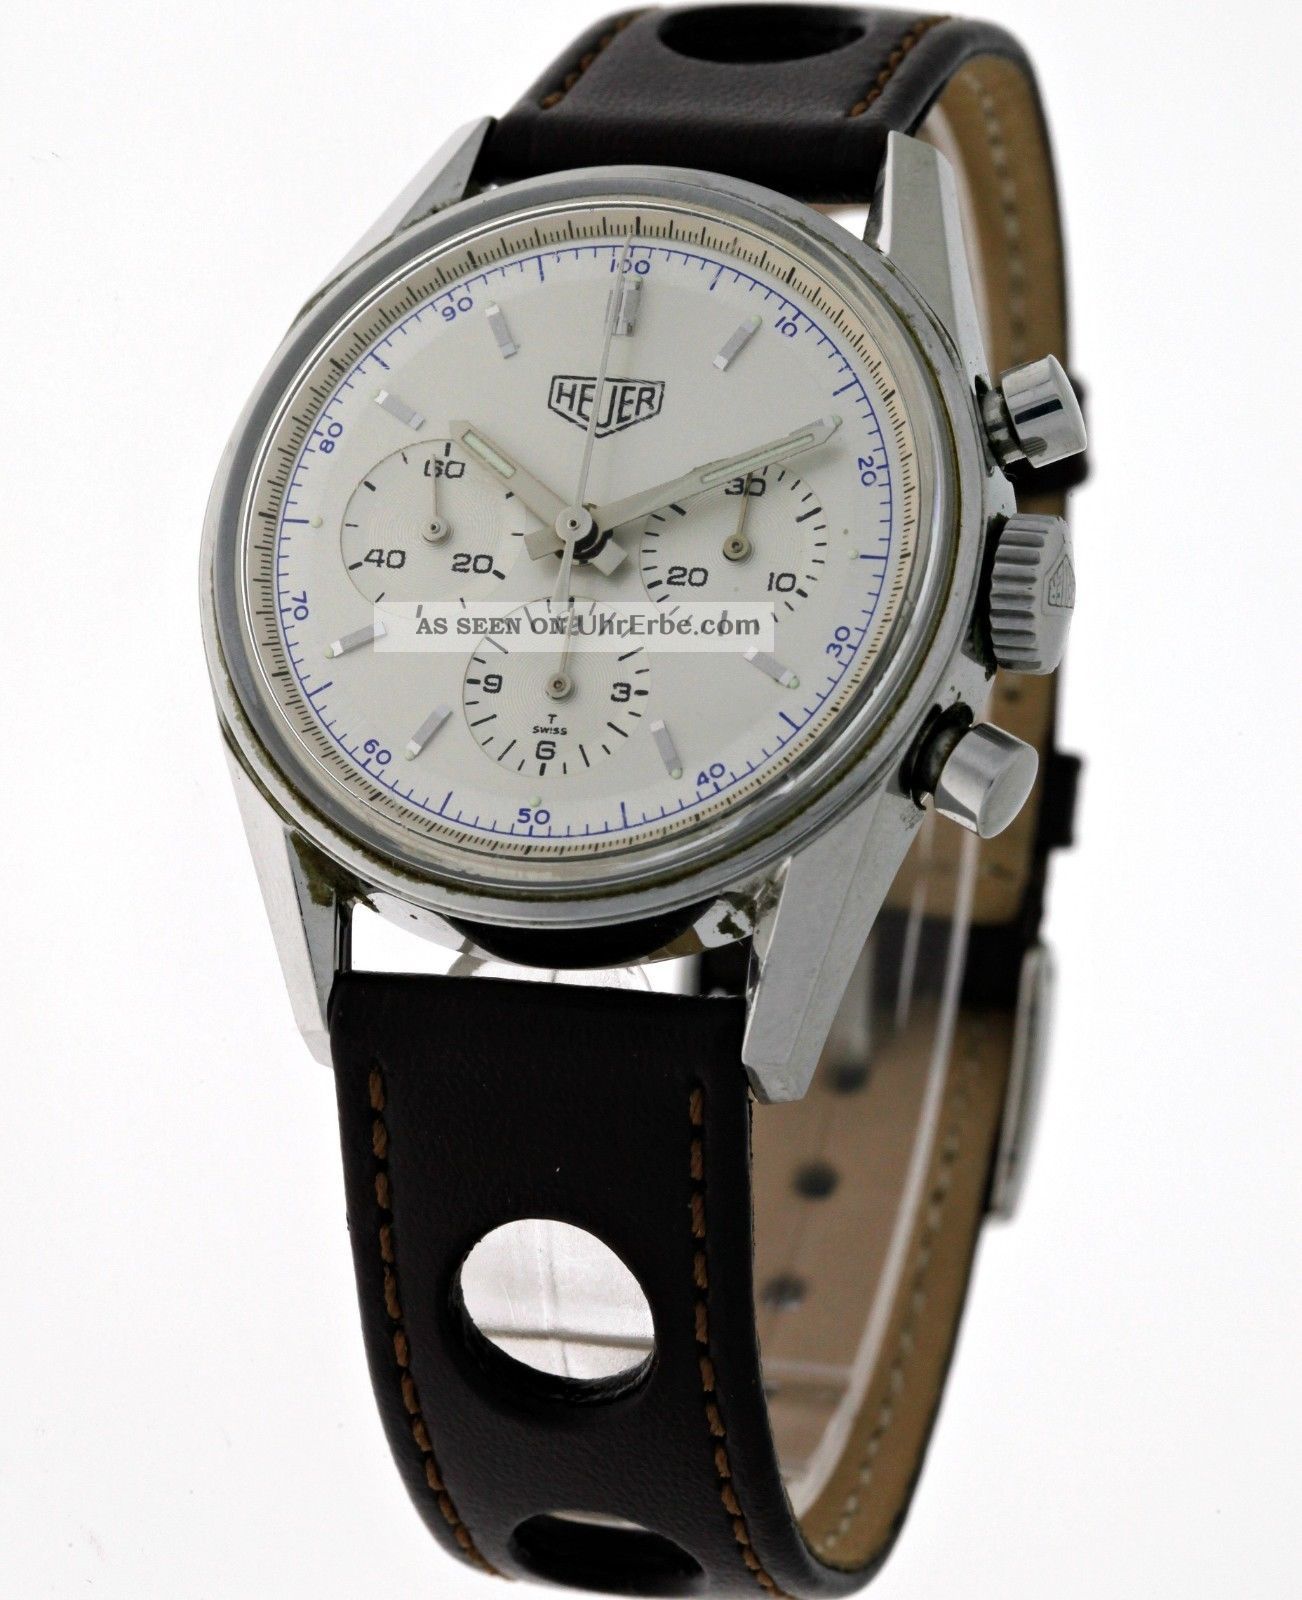 1964 Heuer Carrera Re - Edition Chronograph Cs3110 Lemania 1873 - Box&papiere Armbanduhren Bild